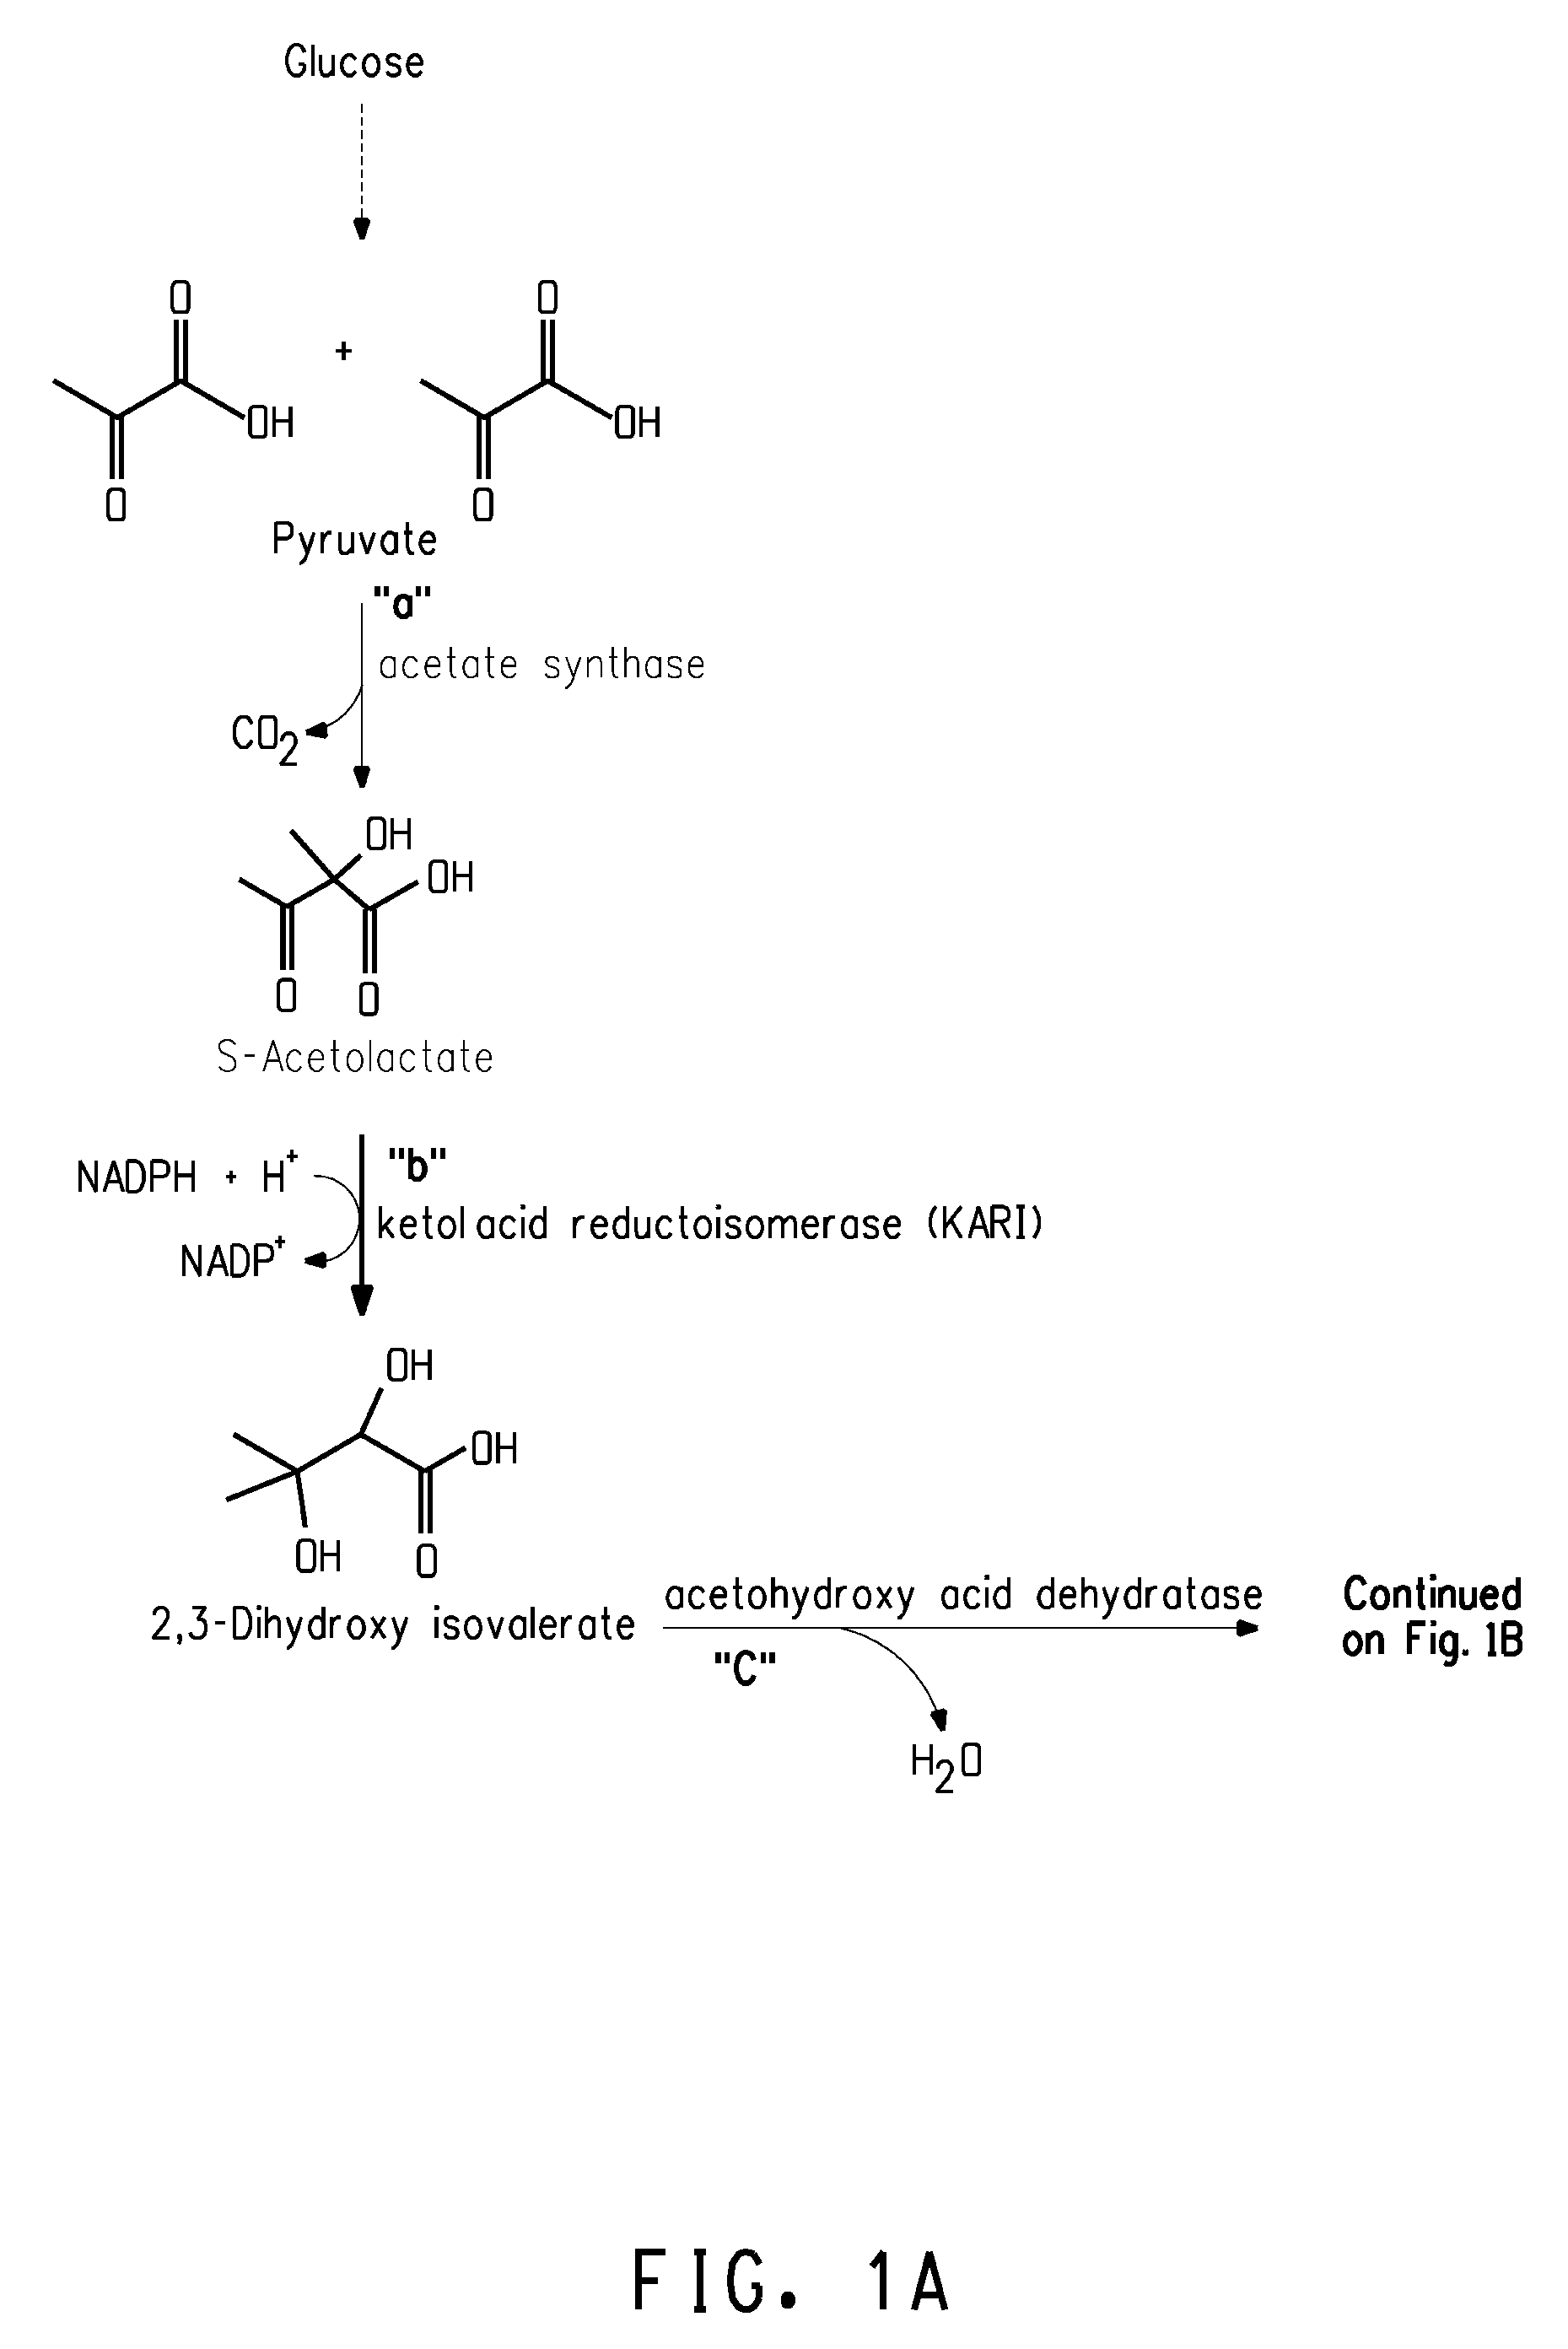 Fermentive production of isobutanol using highly active ketol-acid reductoisomerase enzymes